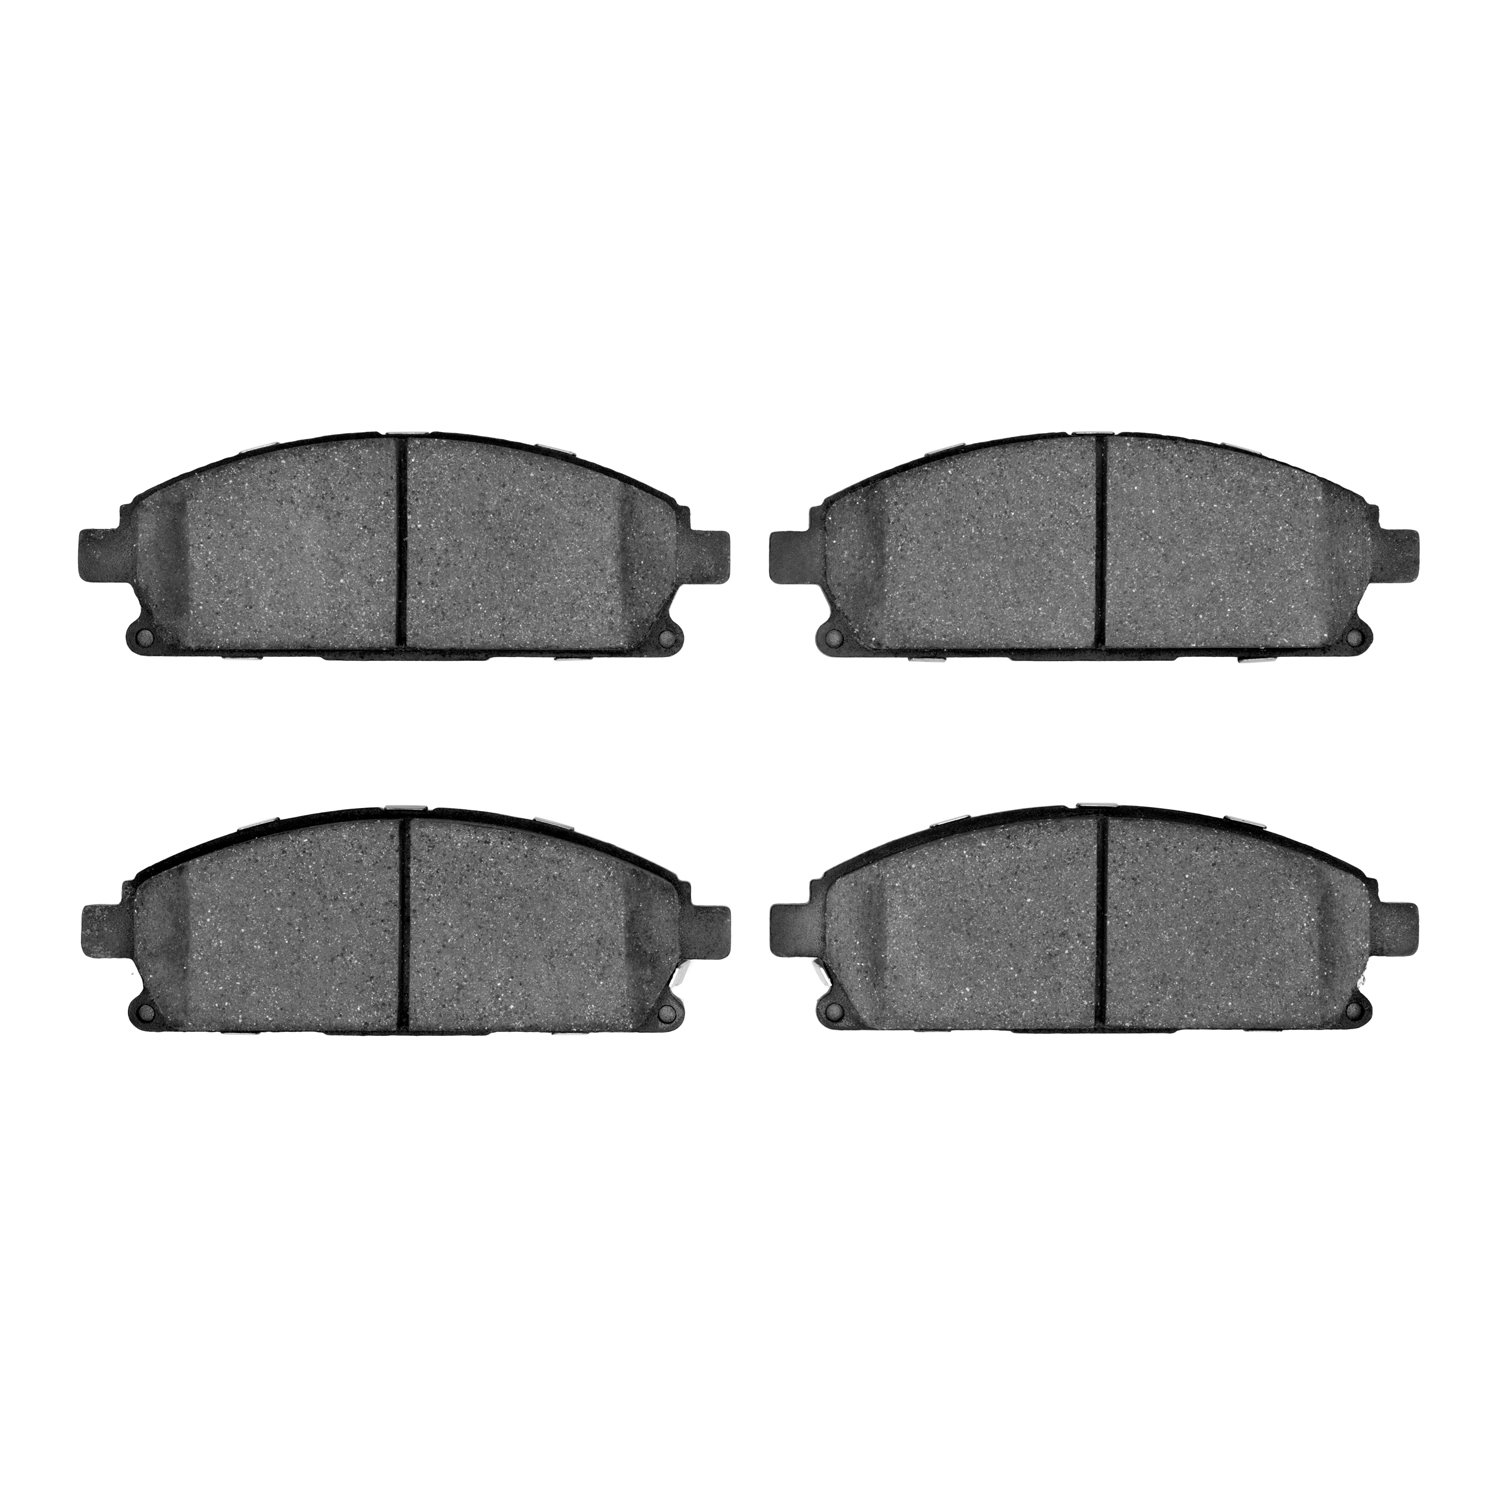 Semi-Metallic Brake Pads, 1996-2017 Fits Multiple Makes/Models, Position: Front